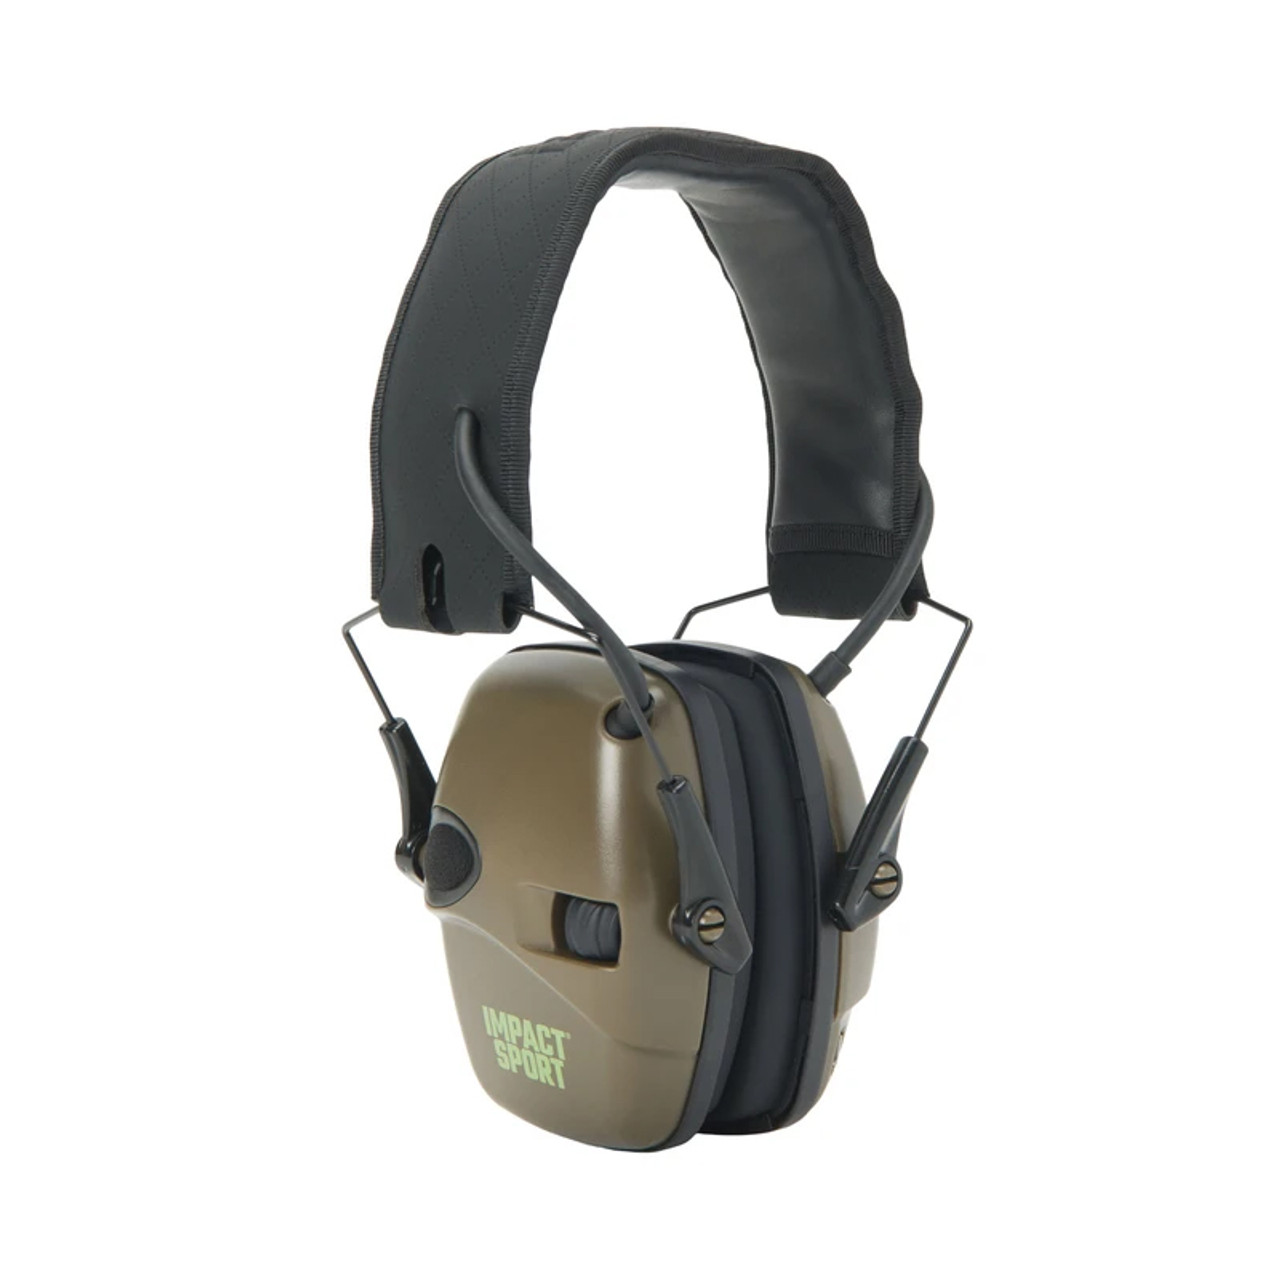 Howard Leight Impact Sport Bluetooth Electronic Earmuff OD Green  [FC-033552025481] - Cheaper Than Dirt